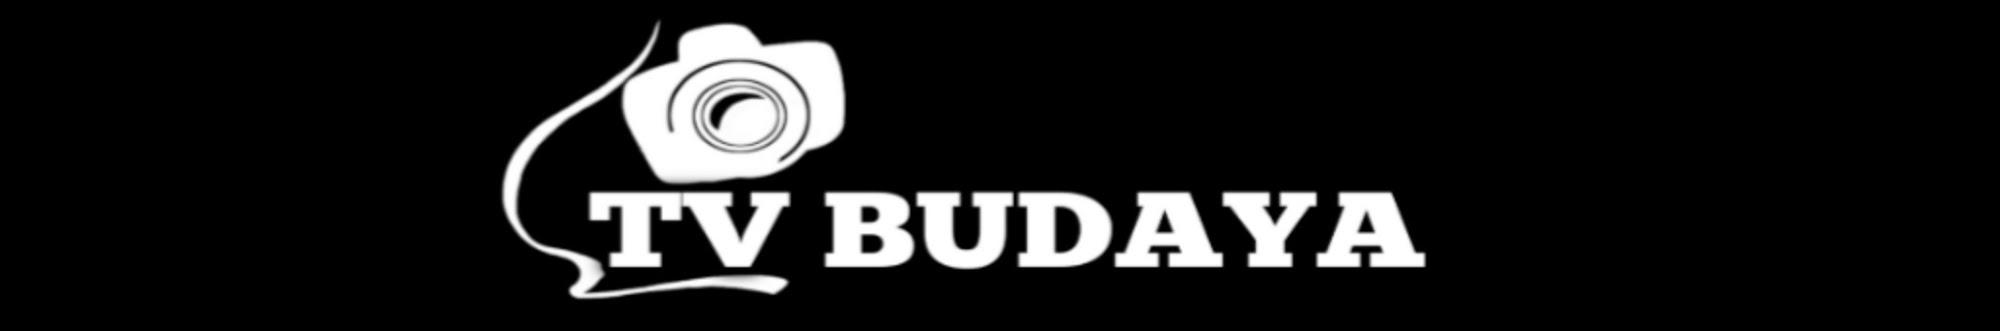 TV BUDAYA